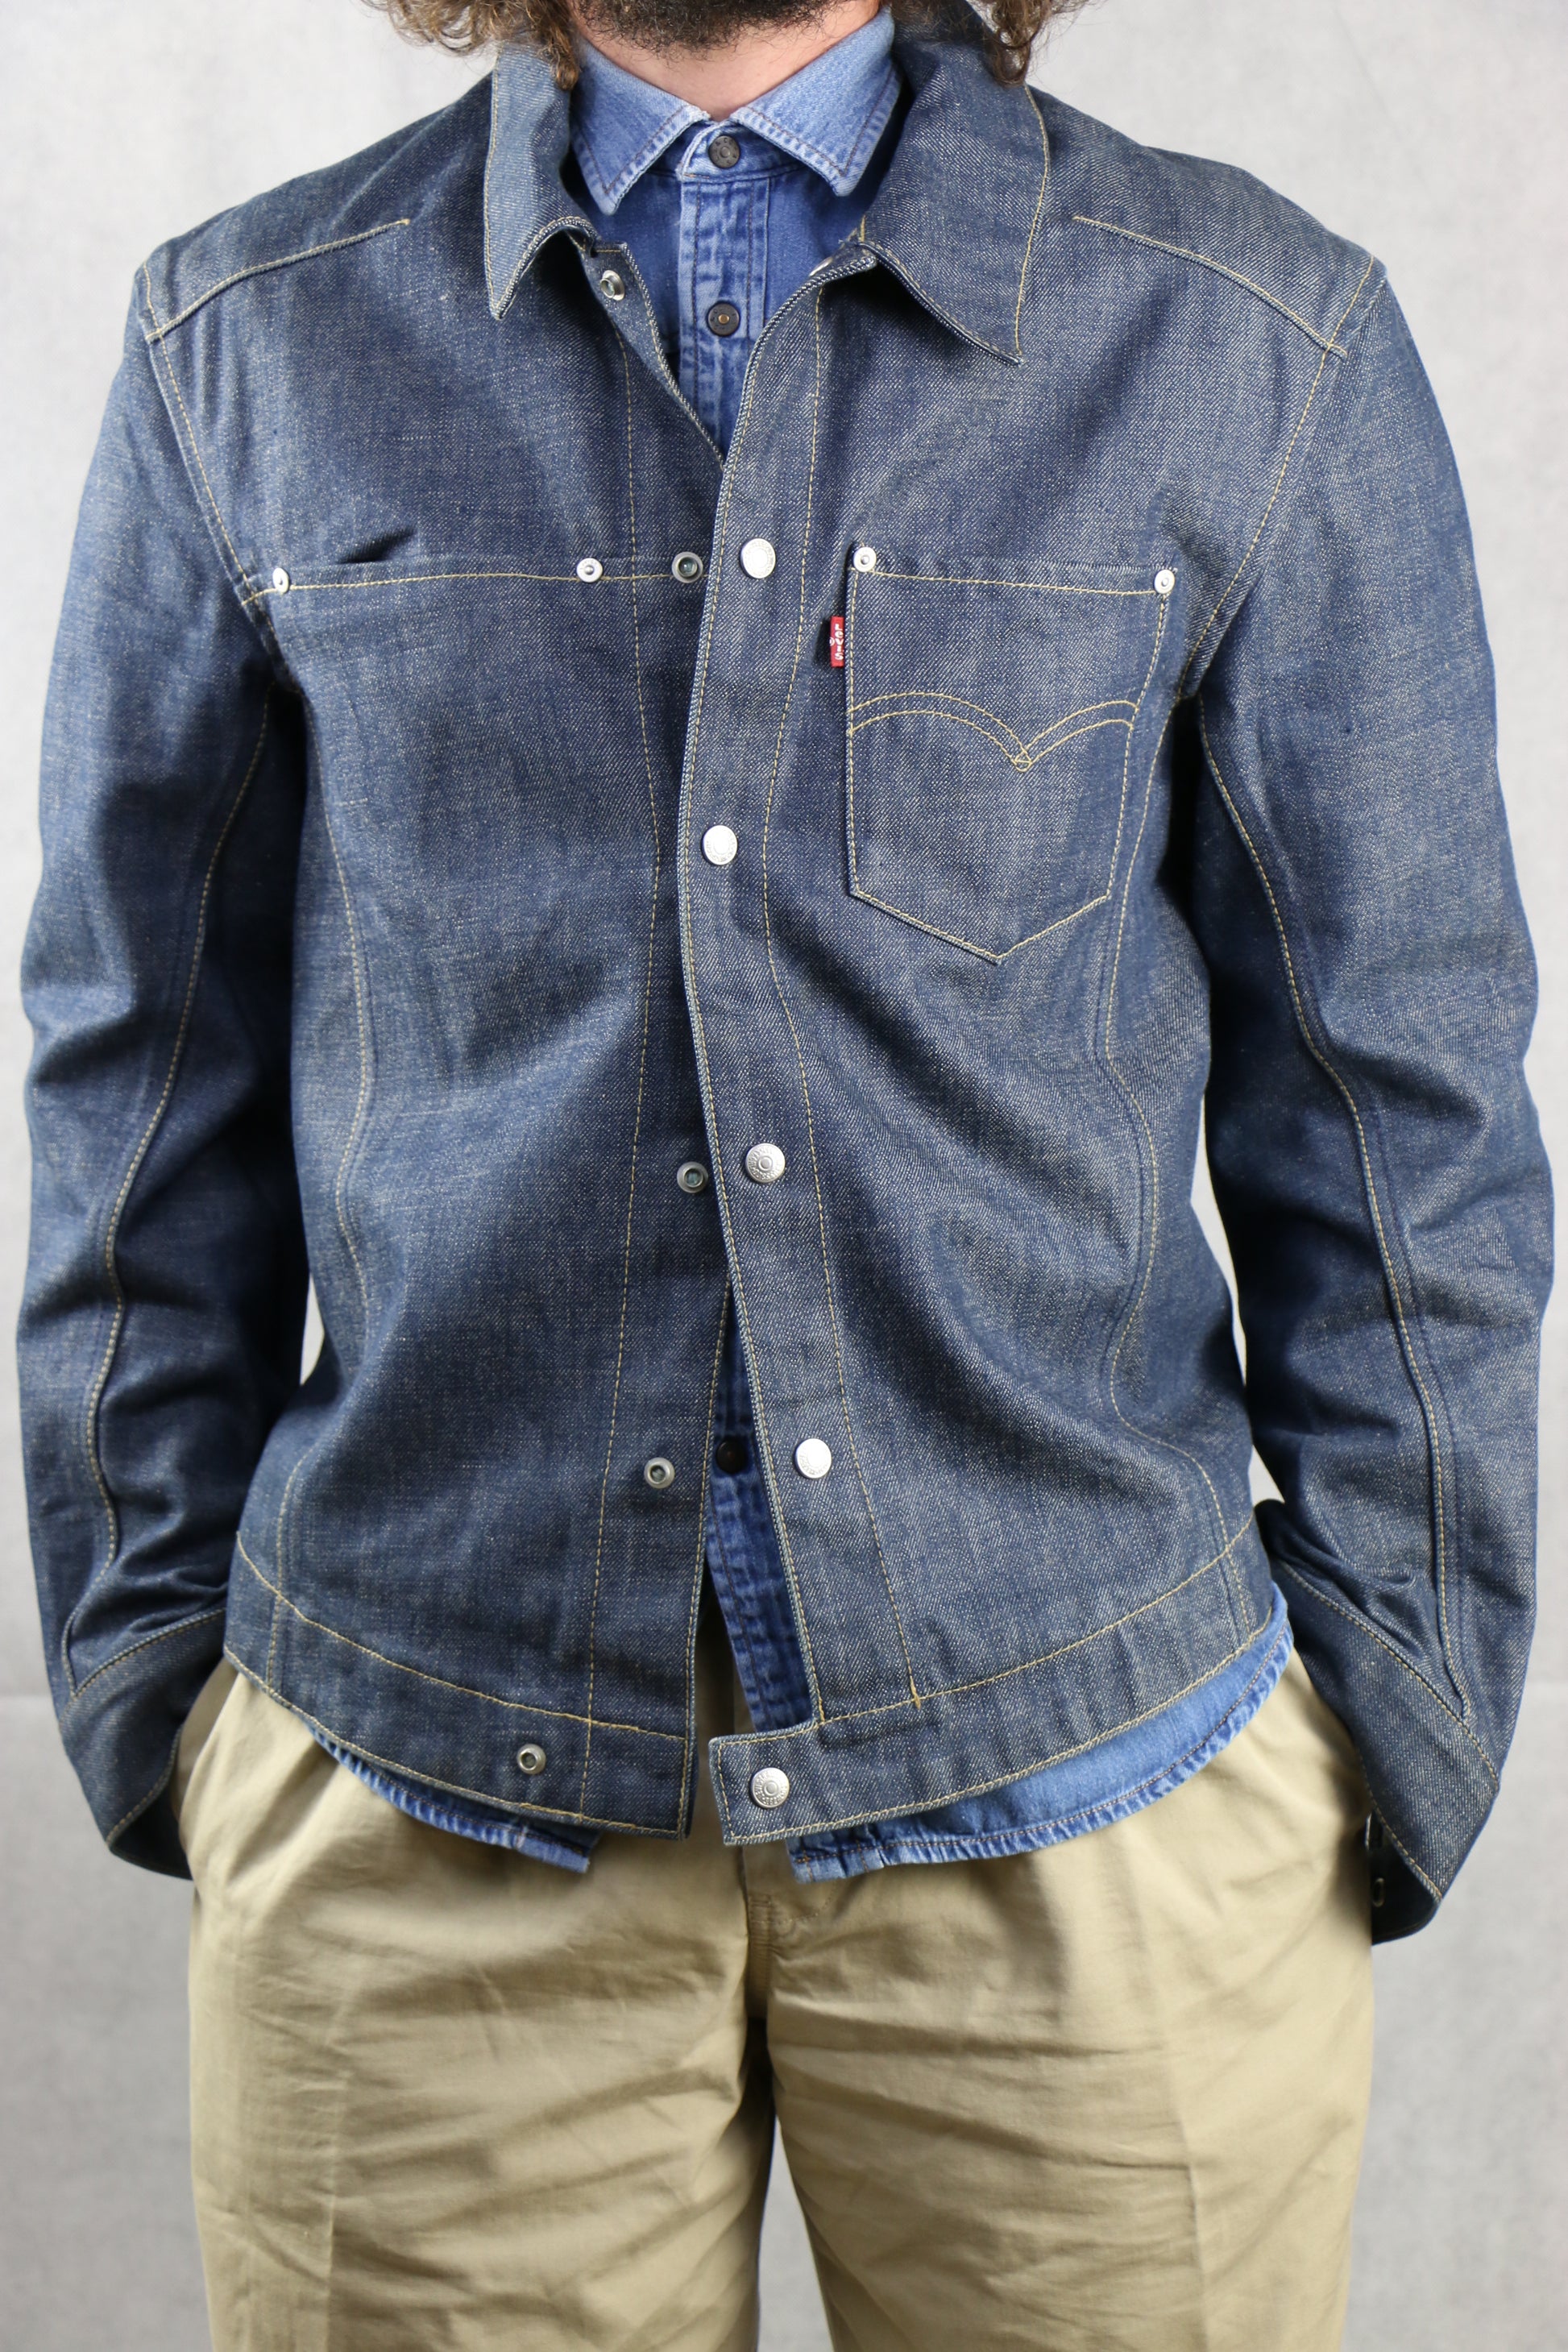 Levi's 'Engineer' Denim Jacket M - vintage clothing clochard92.com